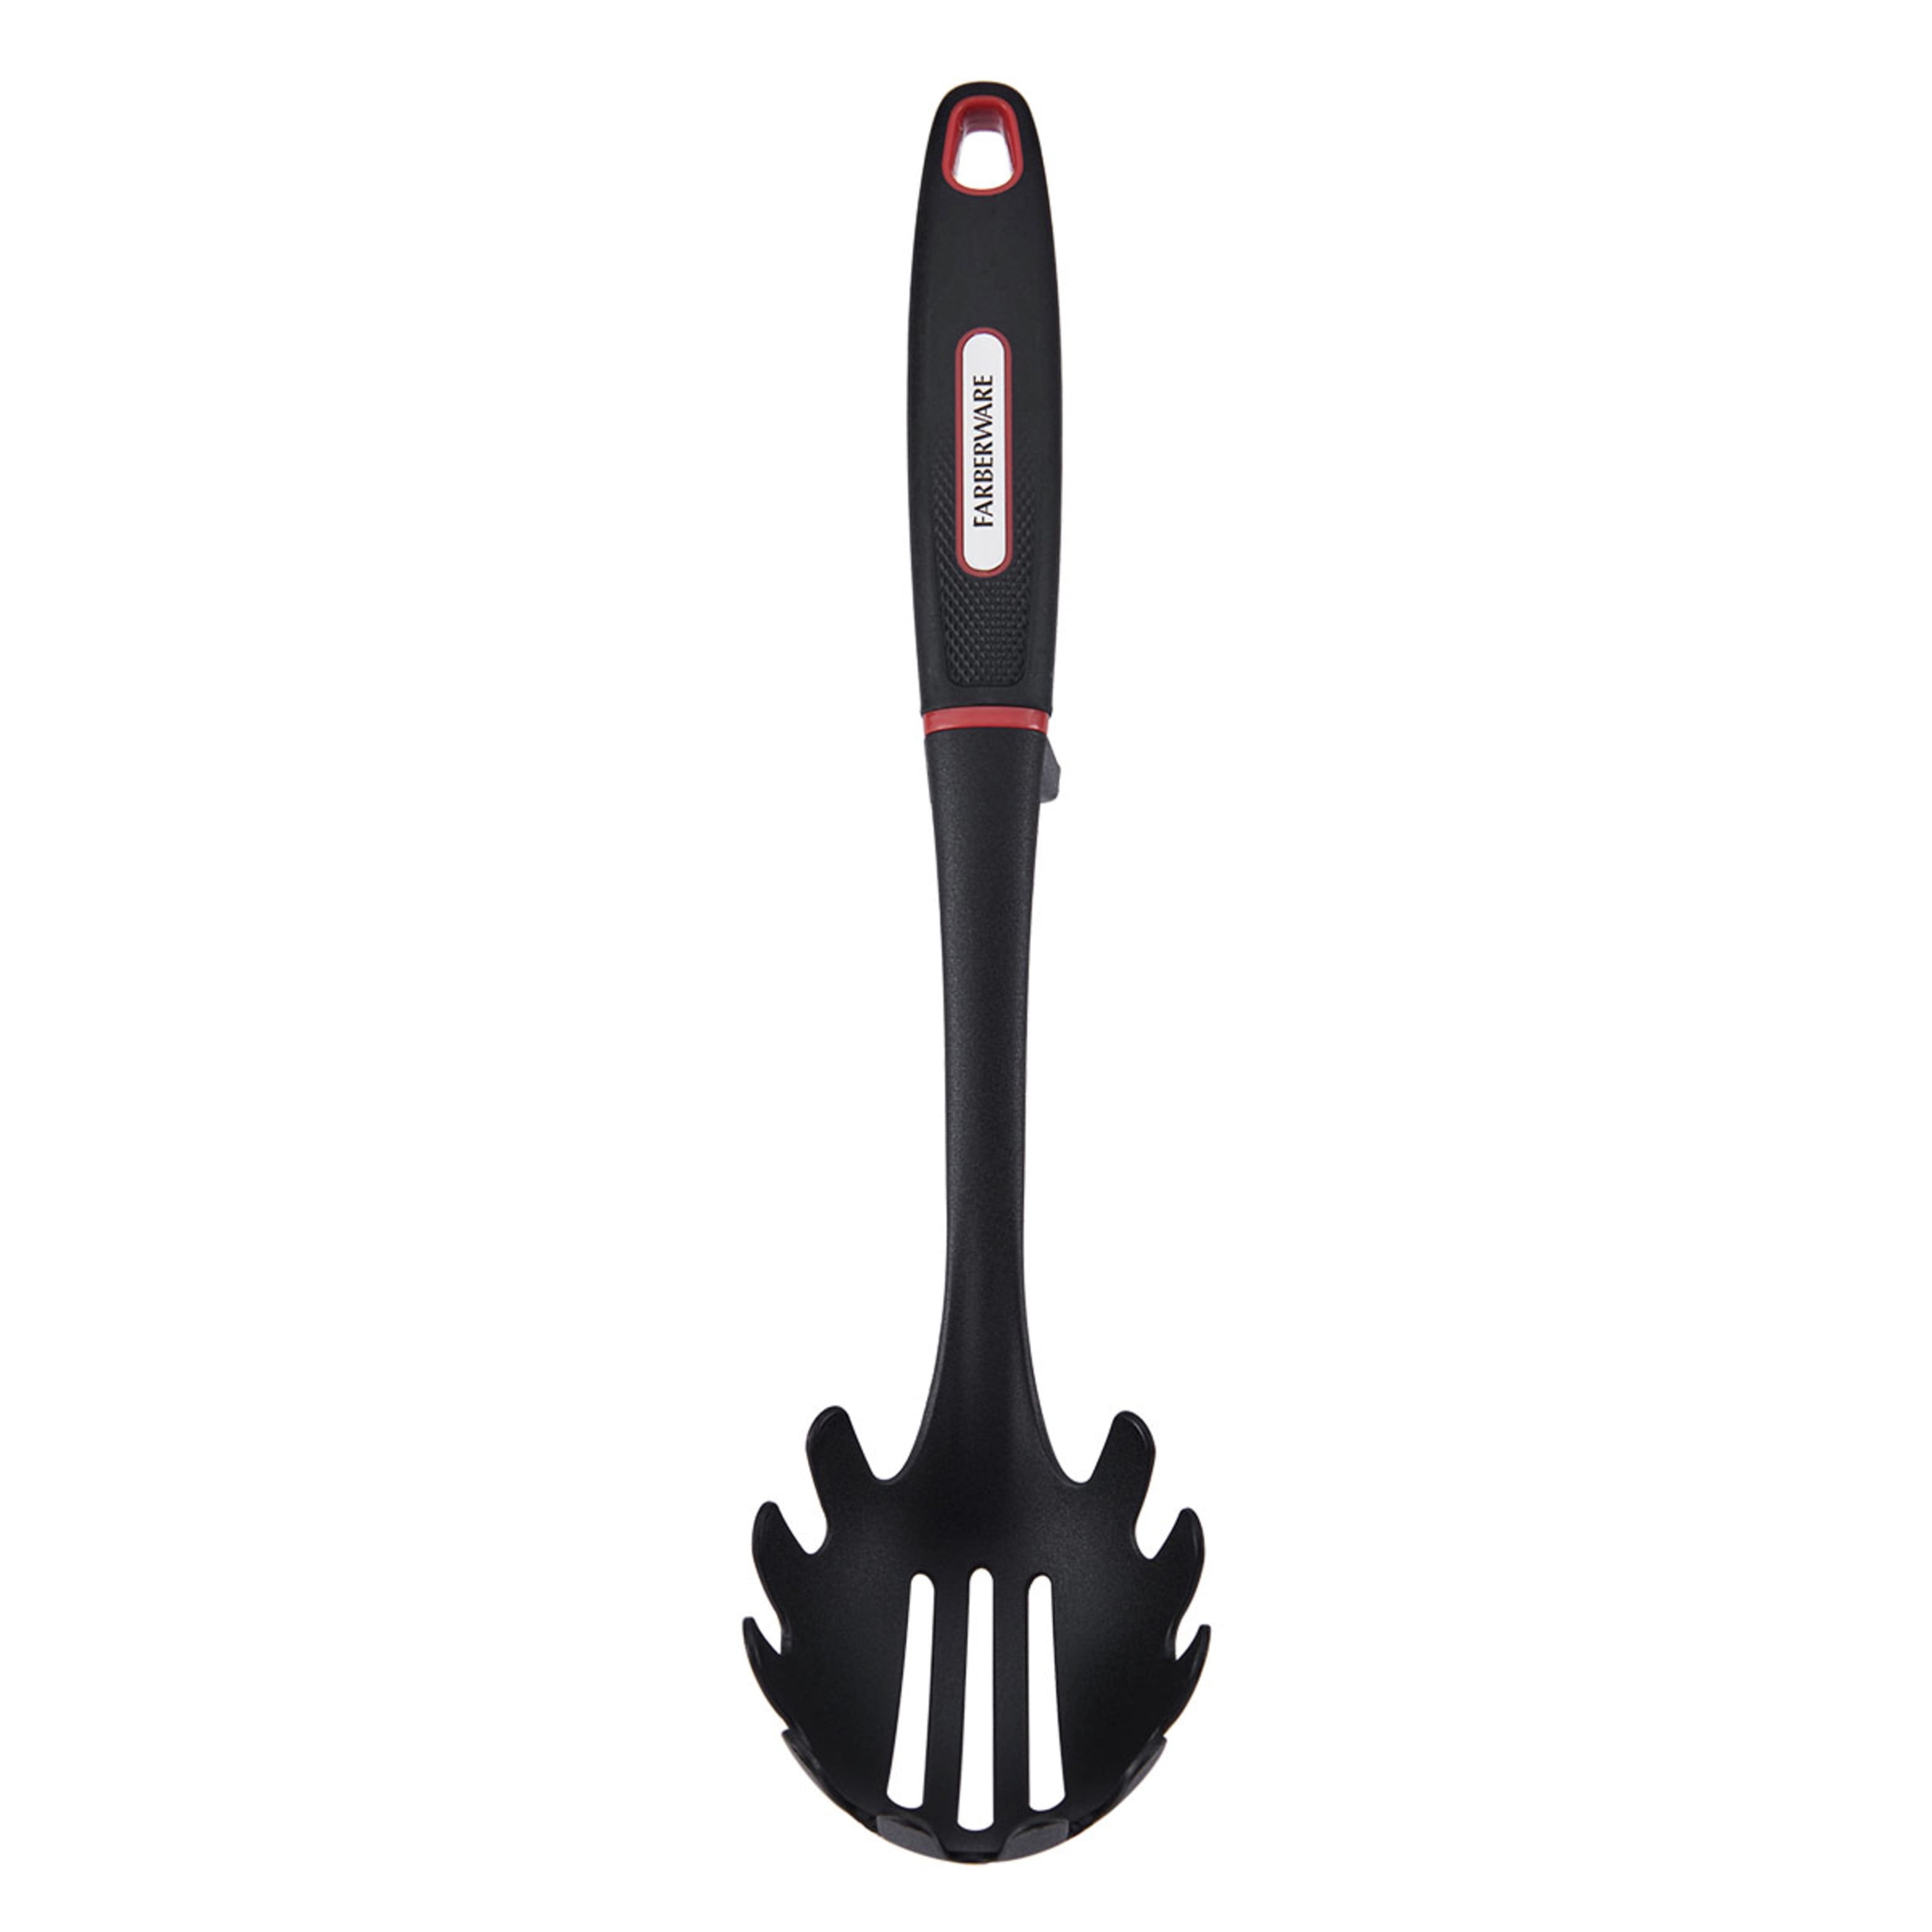 Farberware Soft Grip Cutlery Set - Shop Knives at H-E-B